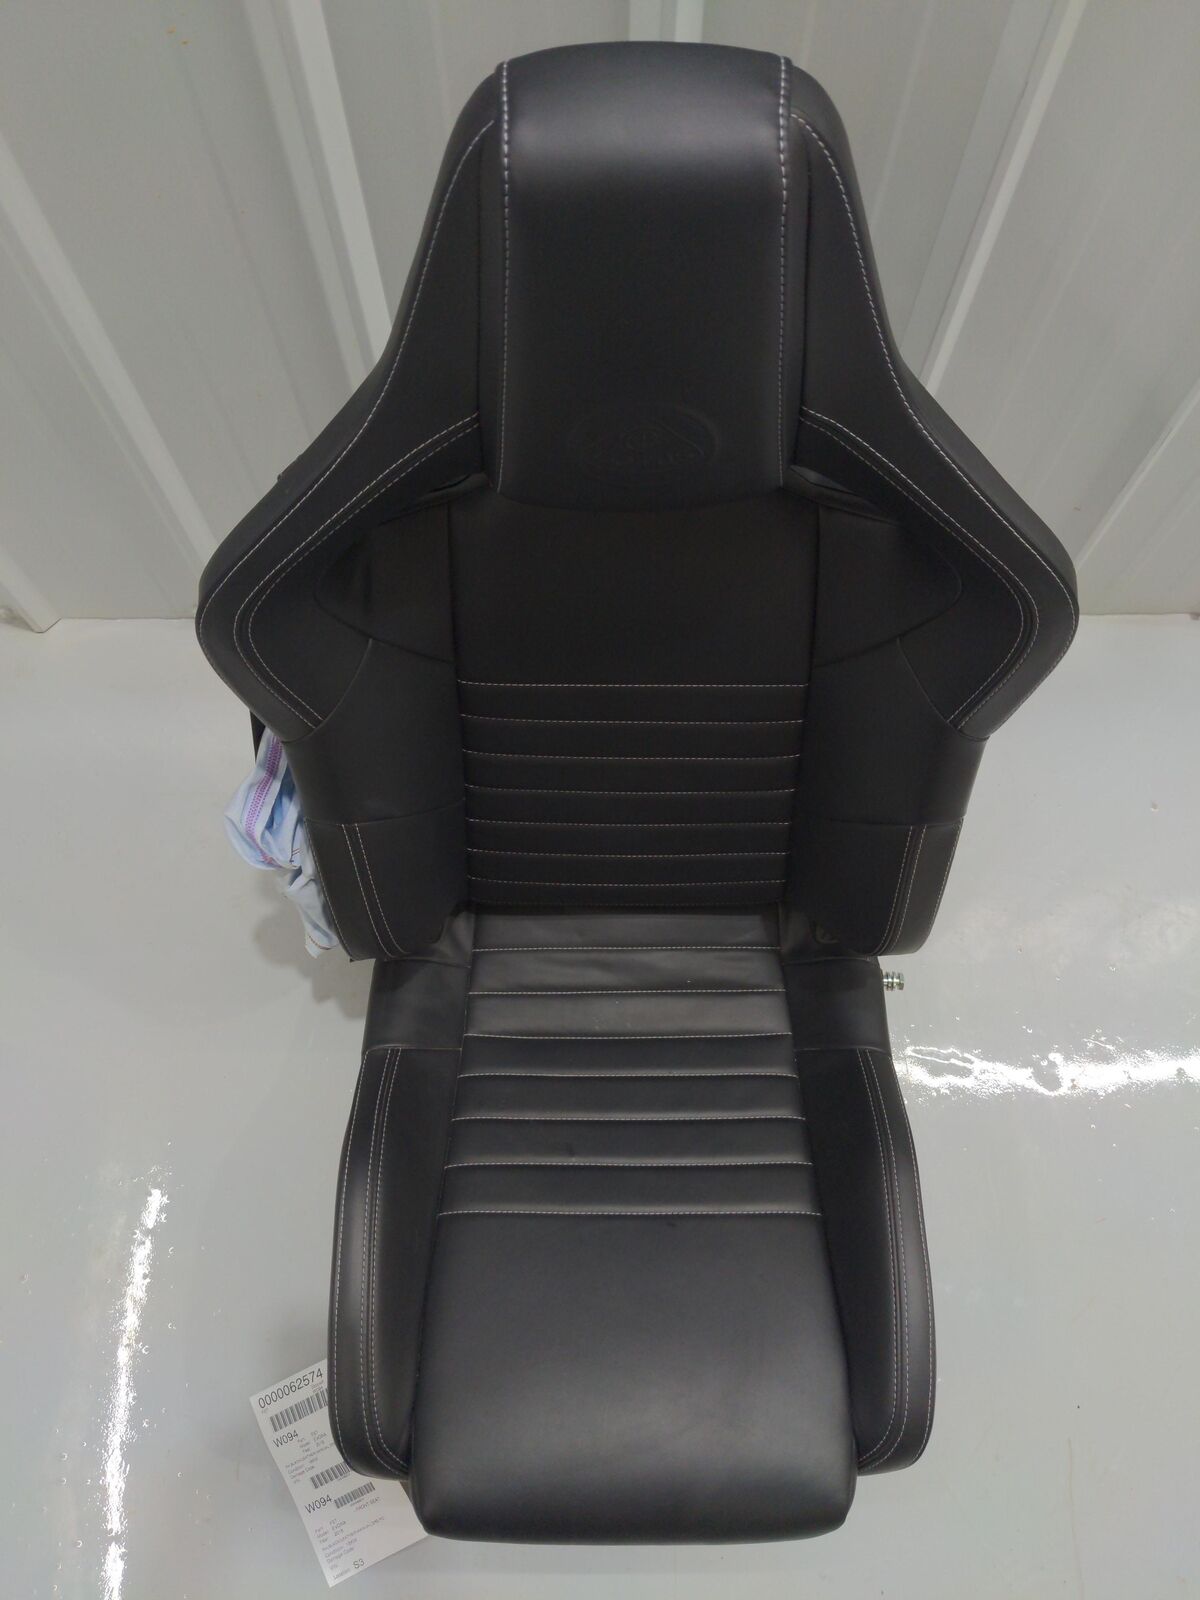 2018 LOTUS EVORA 410 SPORT Right RH Sparco Seat Black Leather *srs Deployed!*